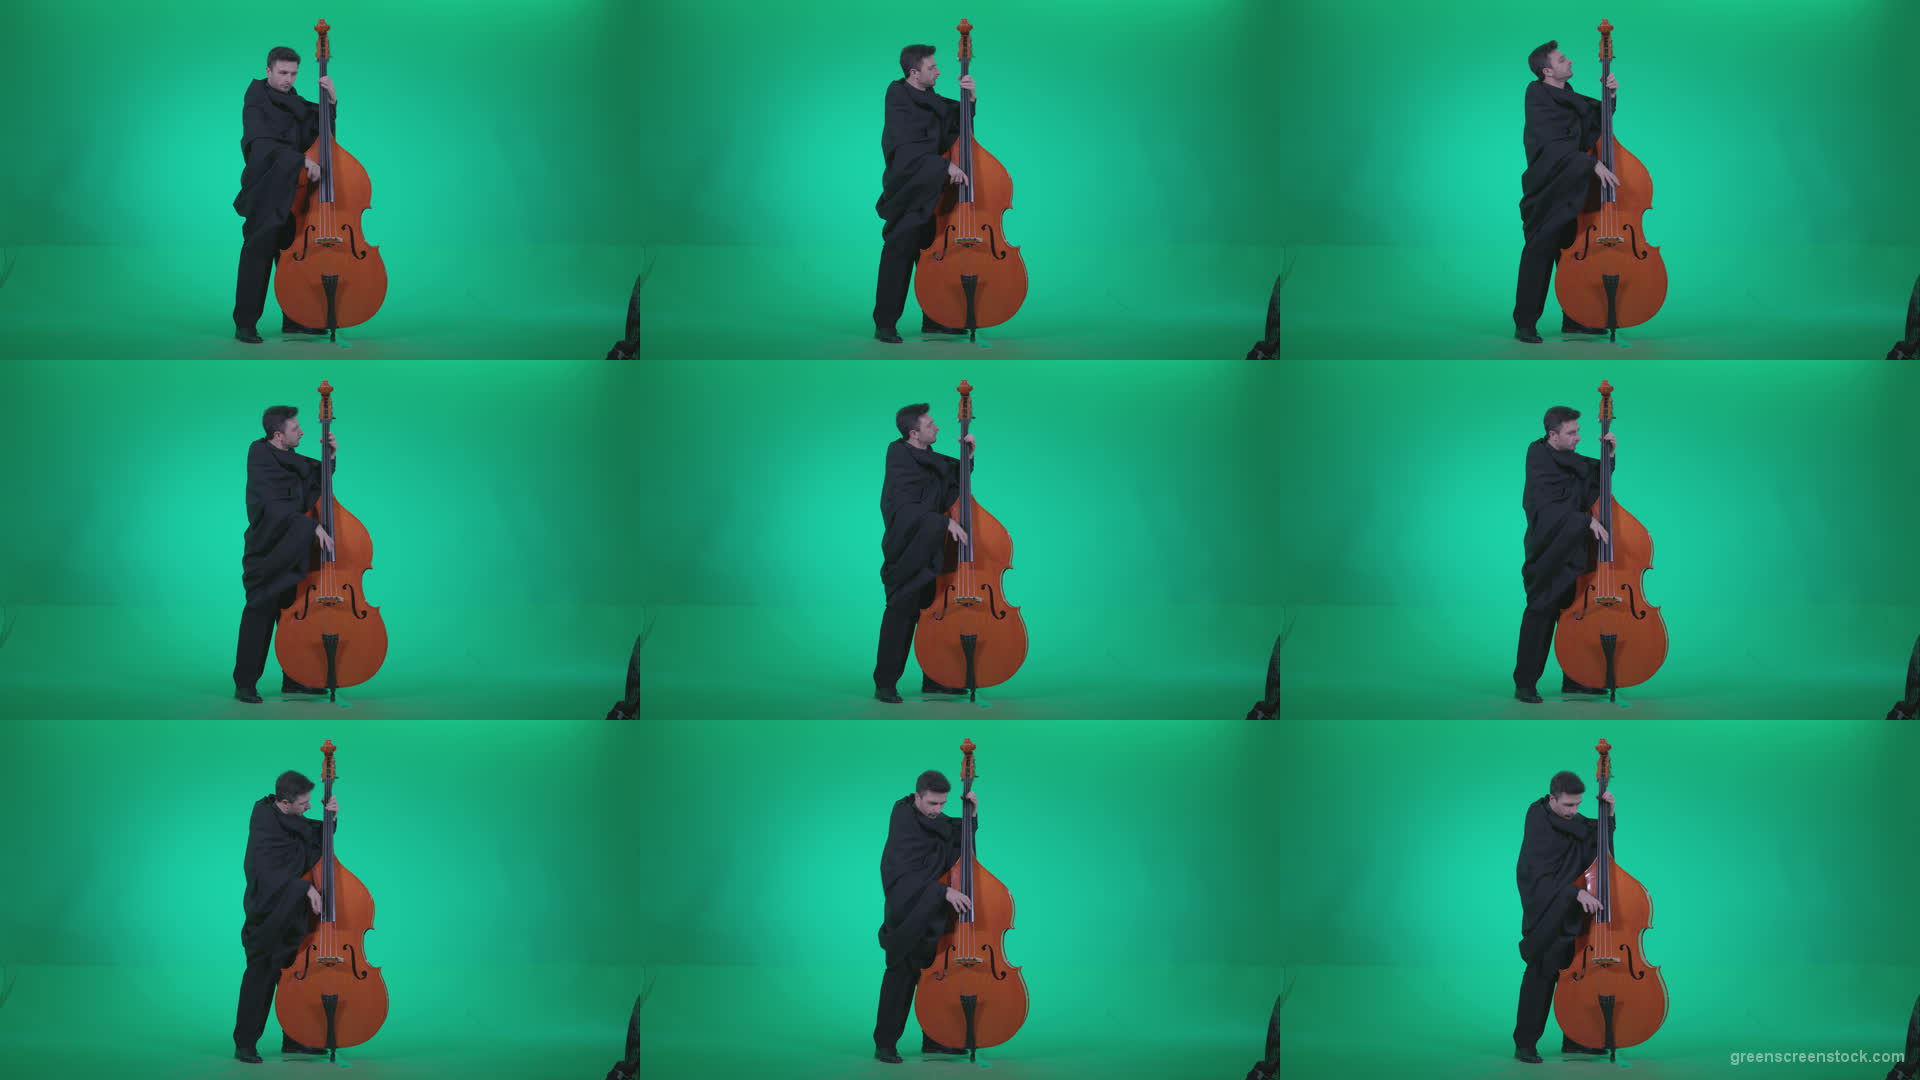 Gotic-Contrabass-Jazz-Performer-1 Green Screen Stock